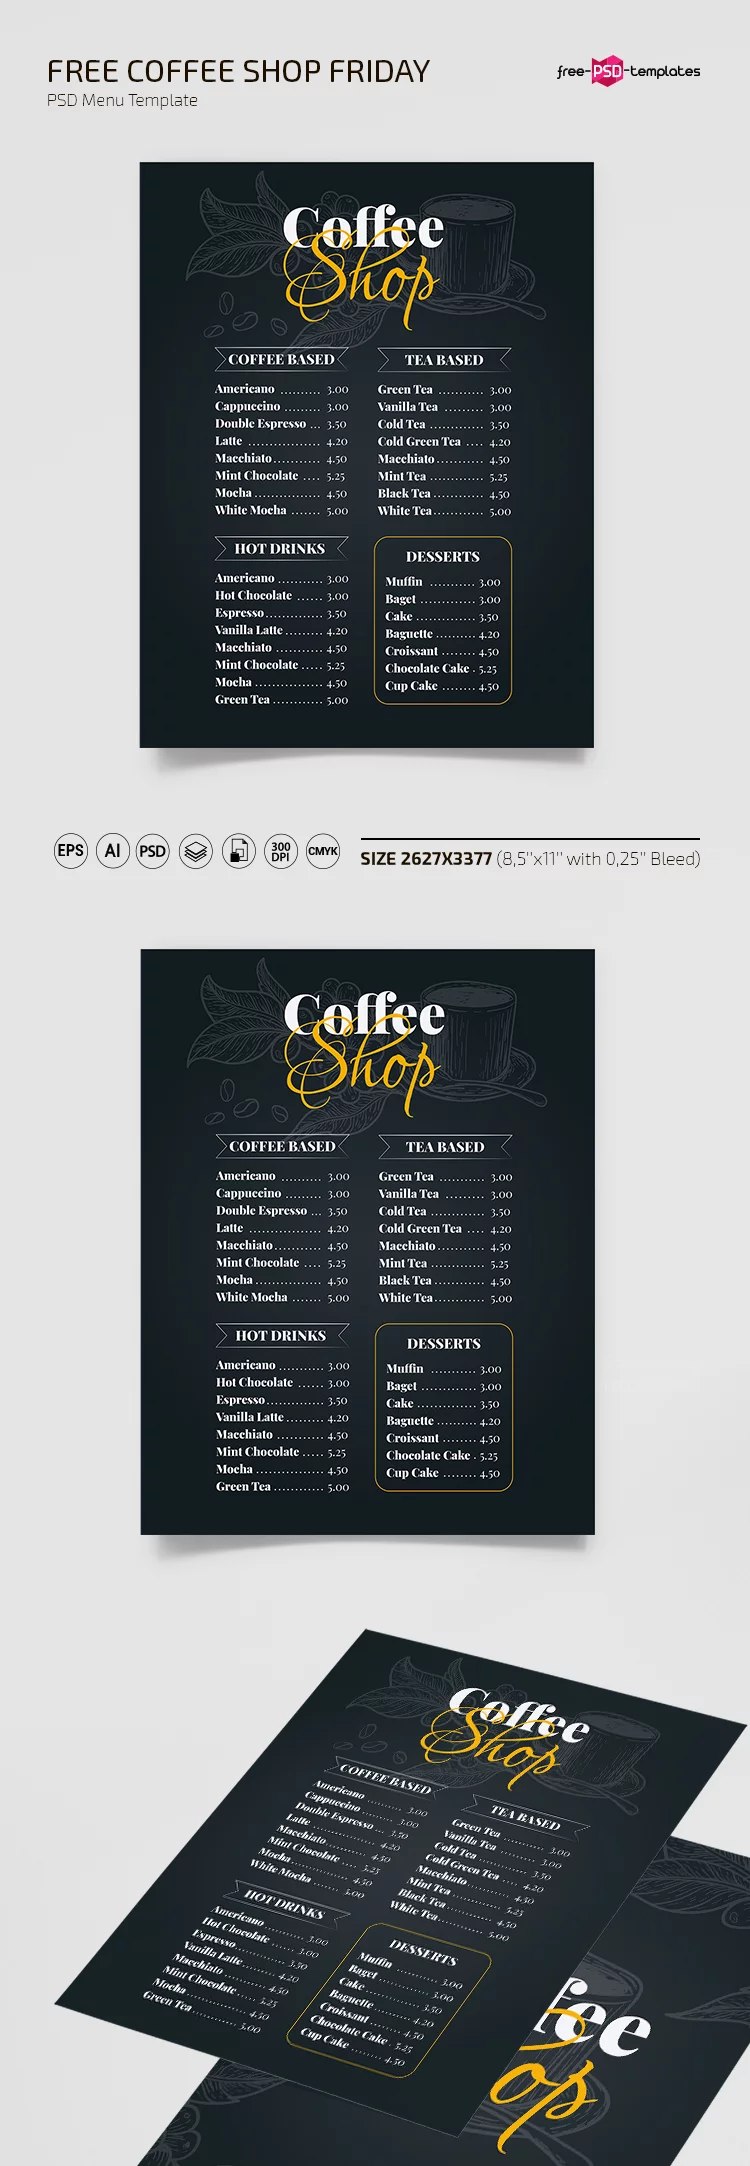 Free Coffee Shop Menu Templates in PSD + Vector (.ai+.eps)